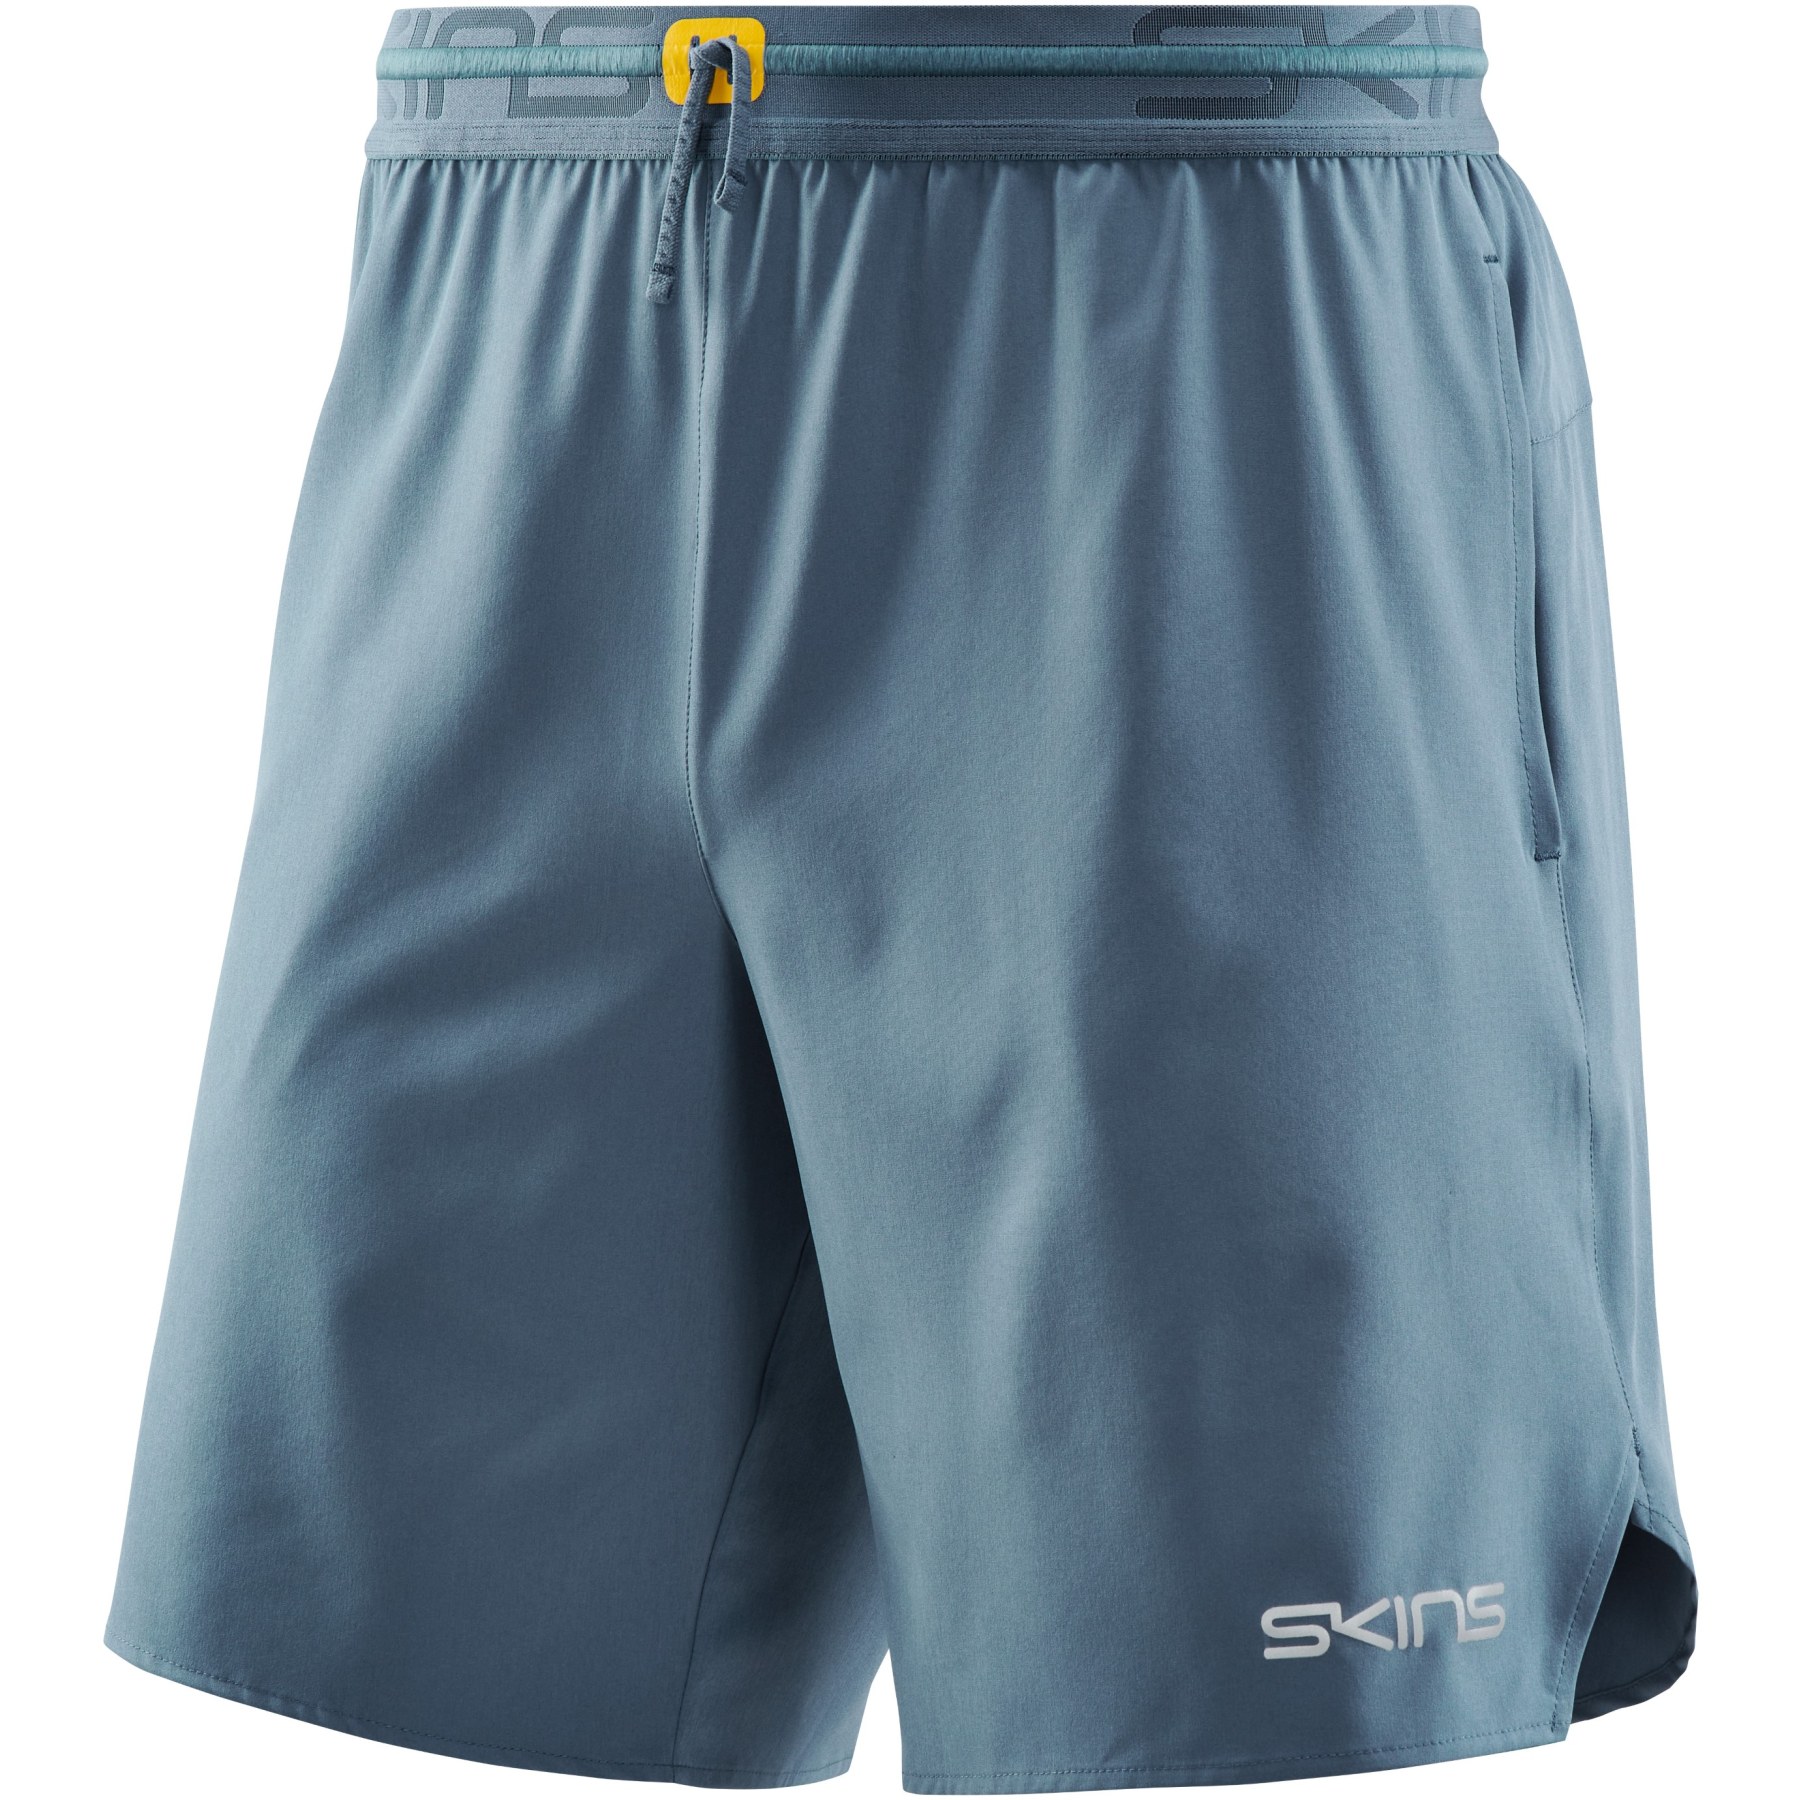 SKINS 3-Series 7 X-Fit Running Shorts Men - Blue Grey